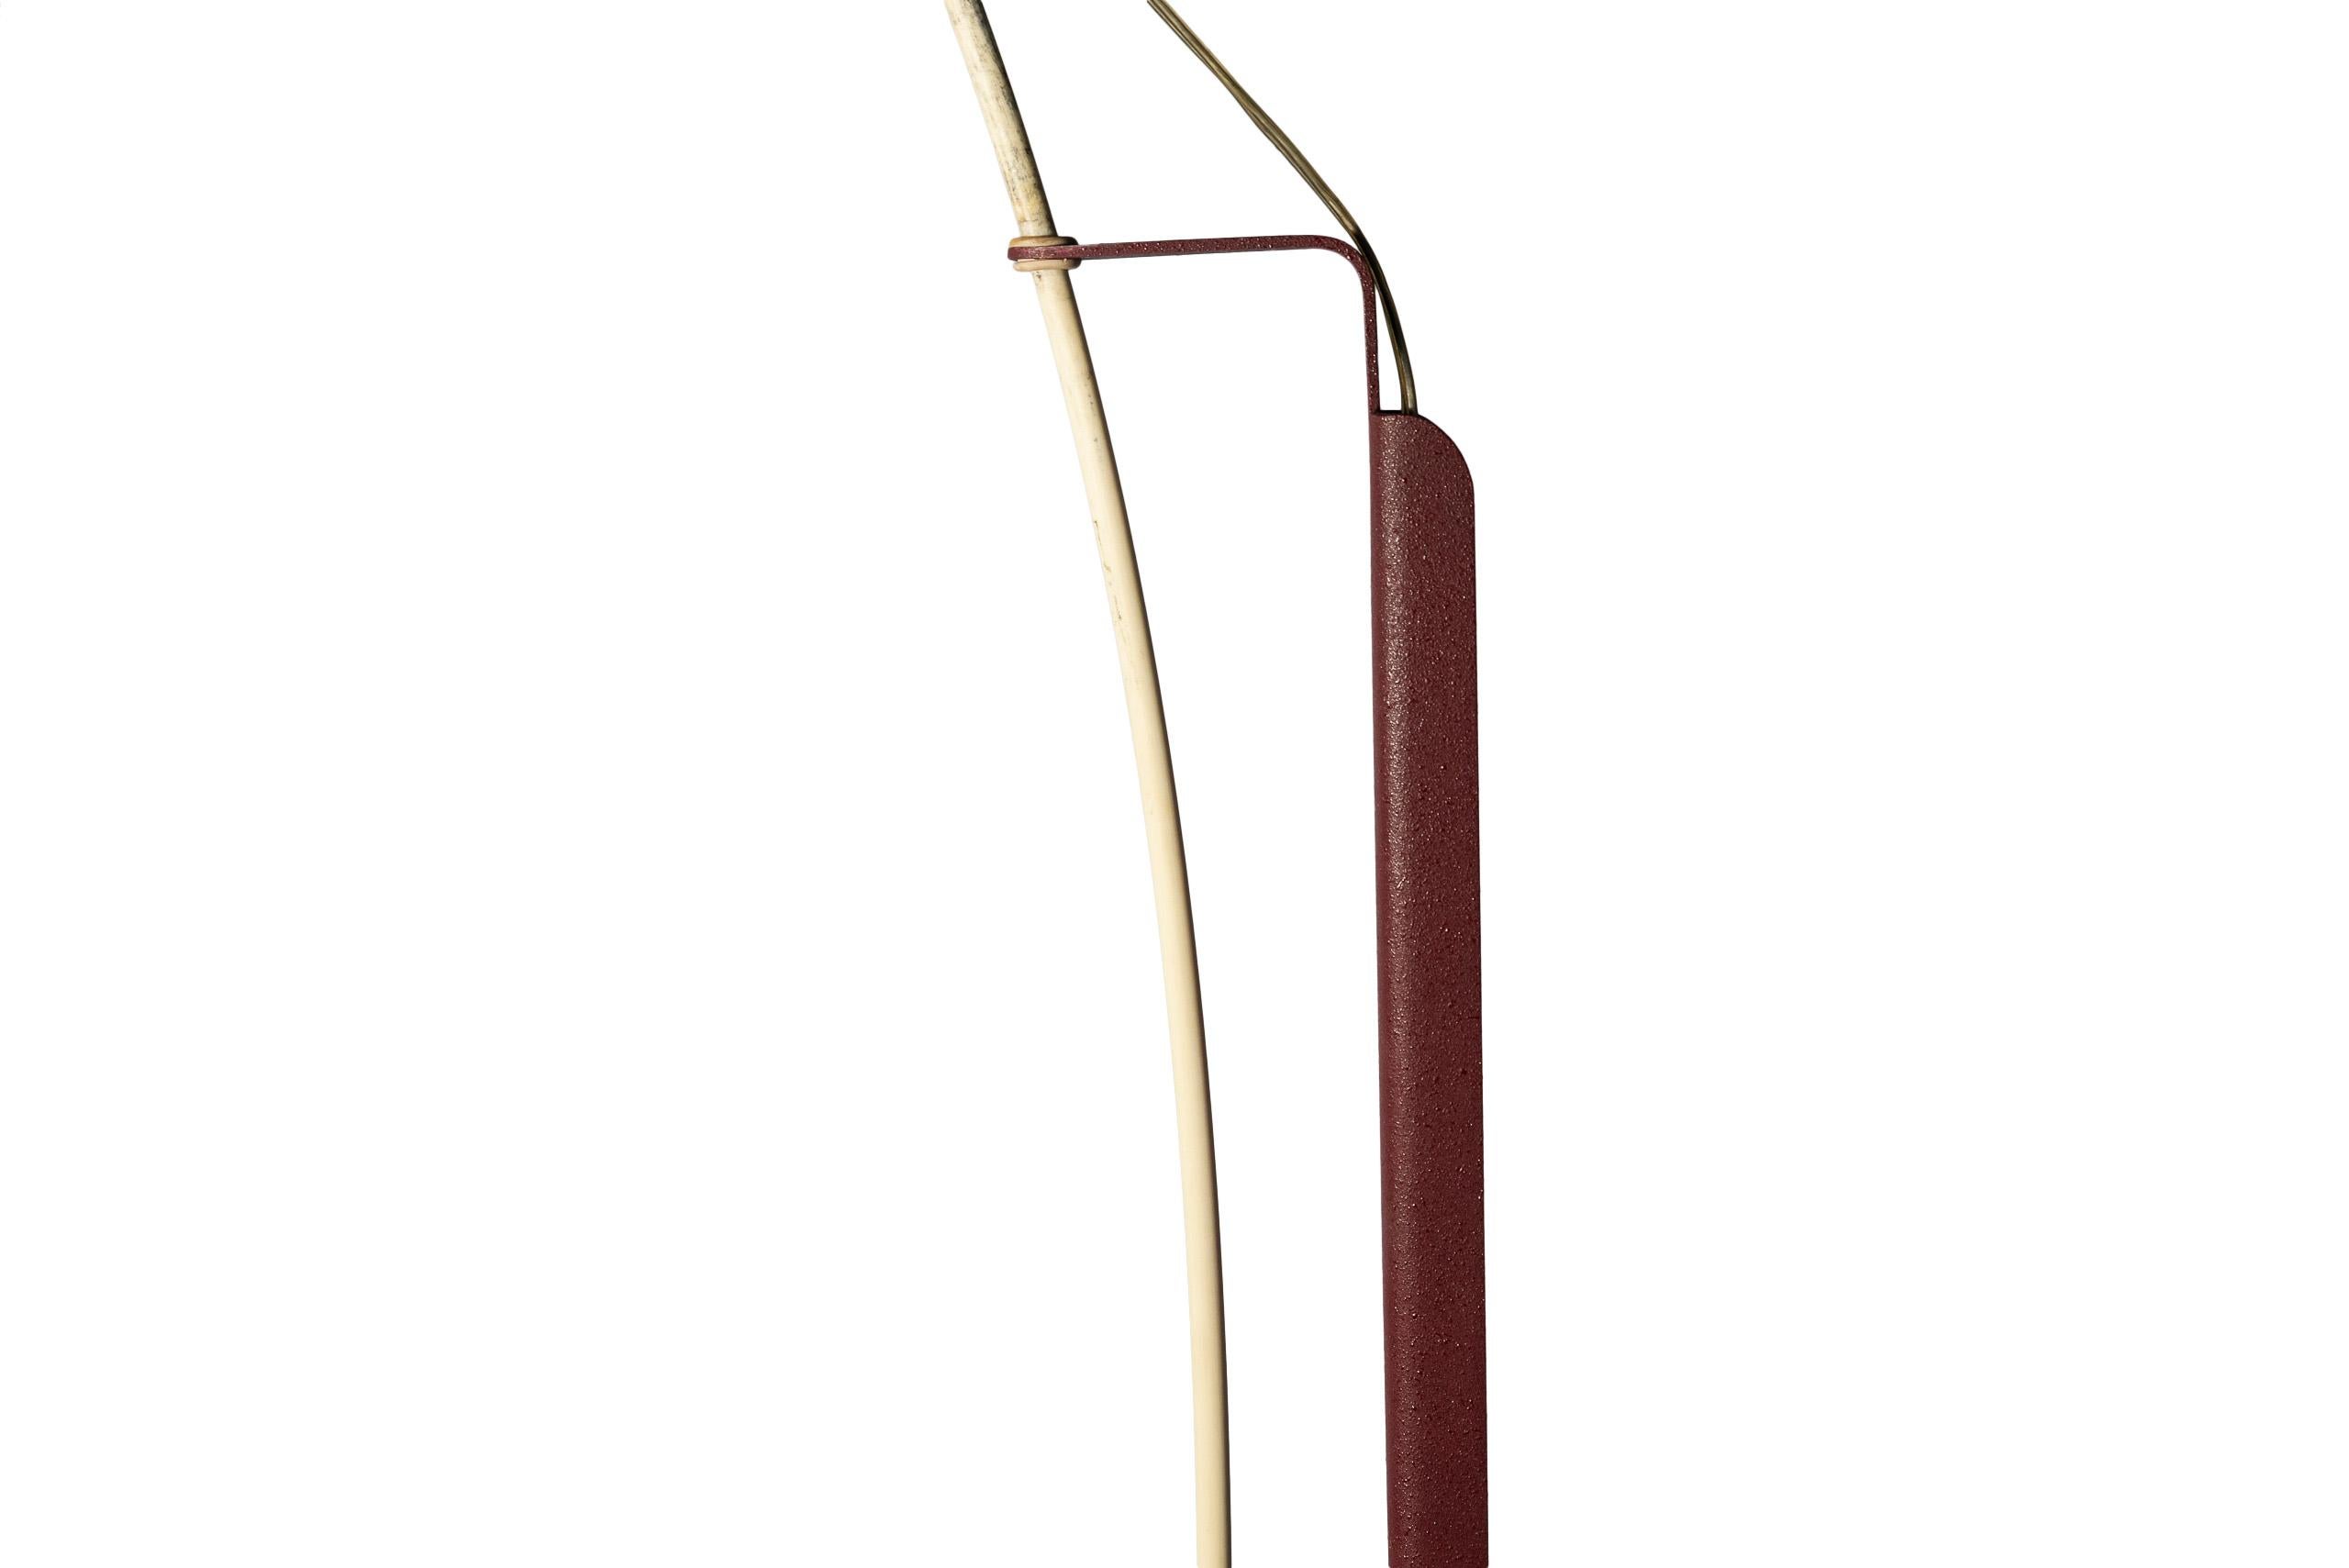 Valmassoi & Conti,
rare adjustable floor lamp,
bamboo and iron,
Luci,
circa 1970, Italy.
Measures: Max. Height 200 cm, width 170 cm, depth 40 cm.